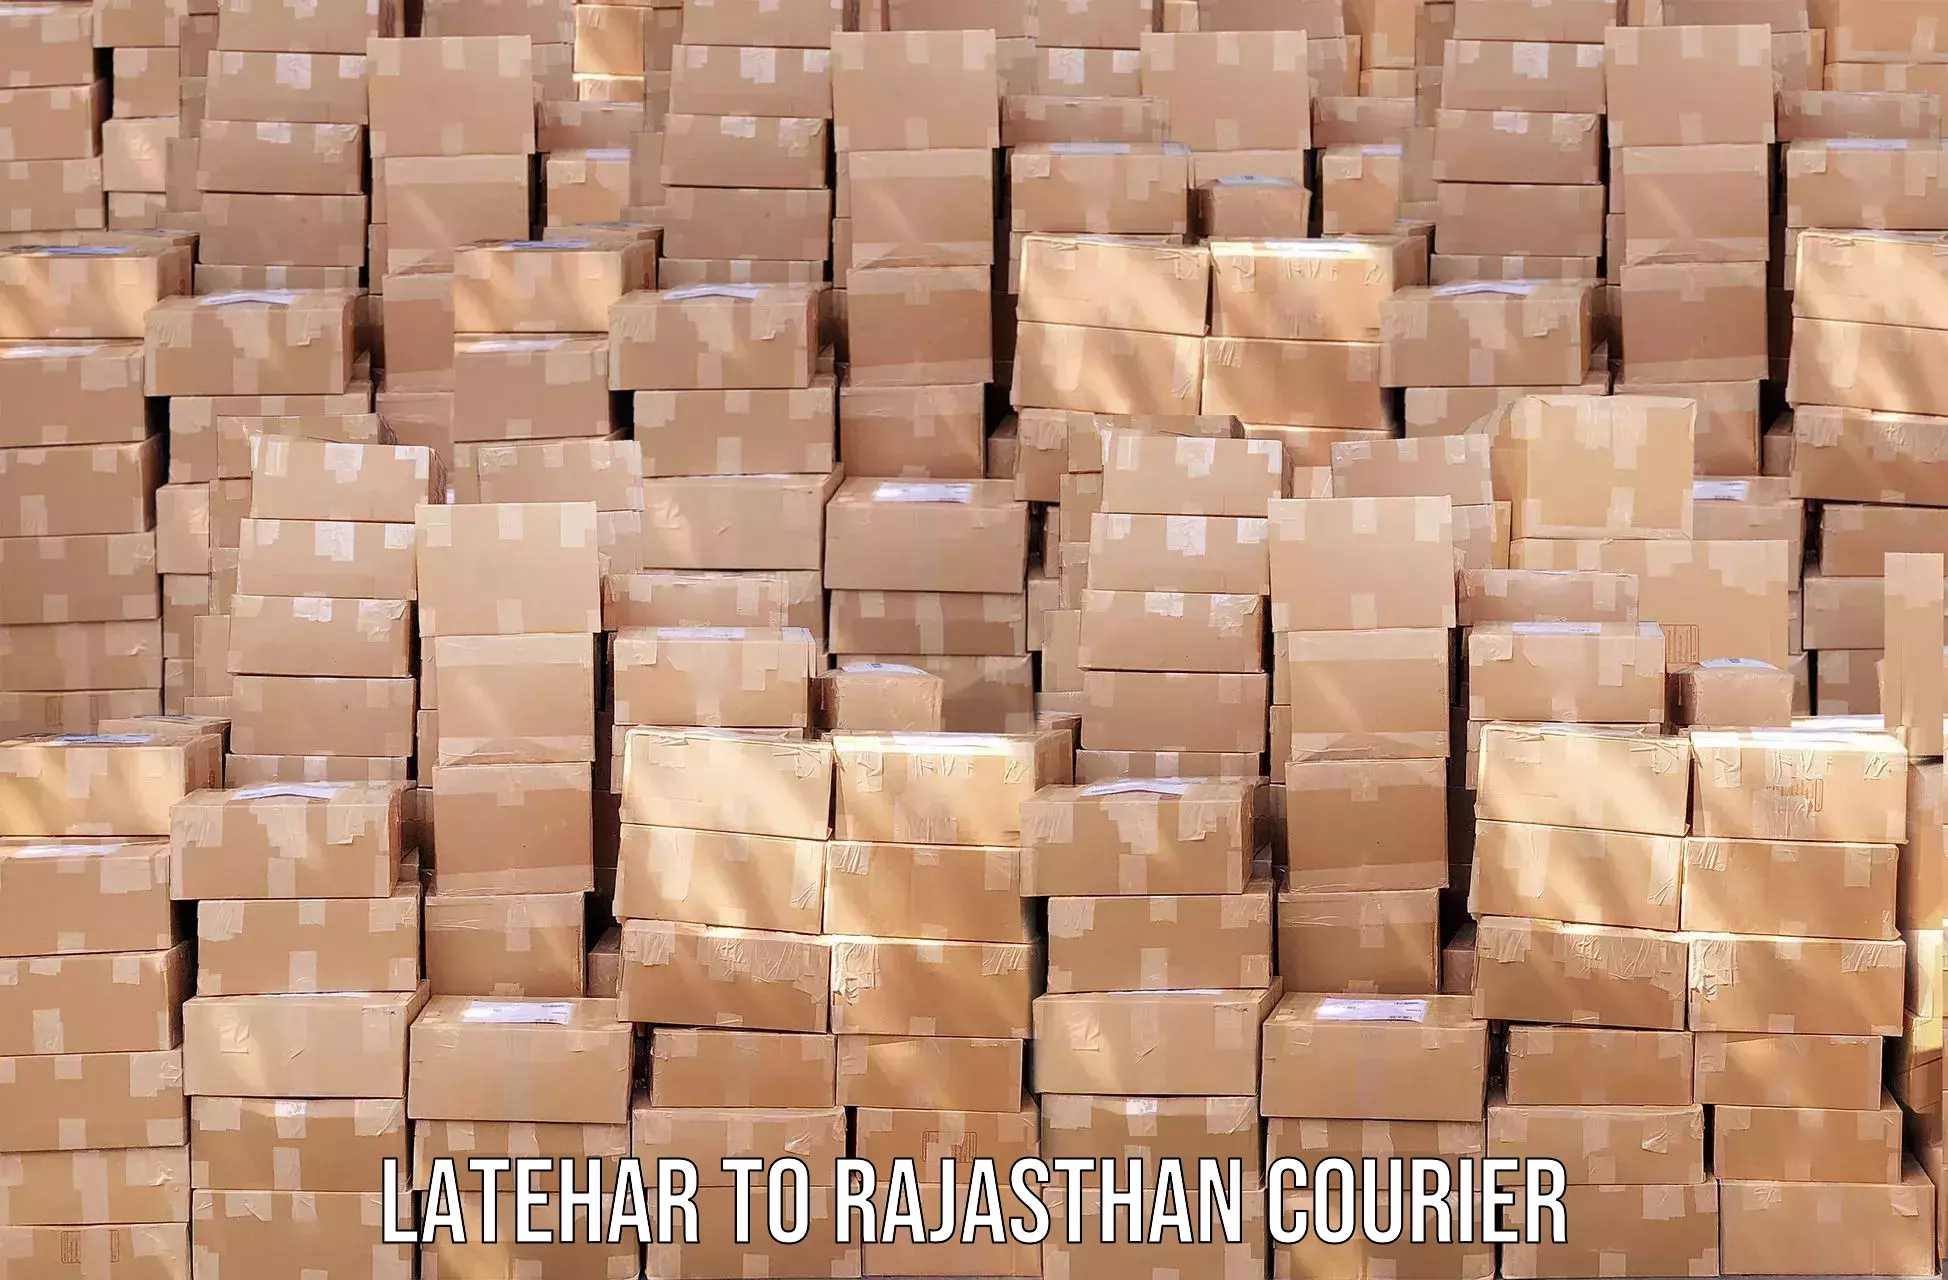 Express delivery capabilities Latehar to Kishangarh